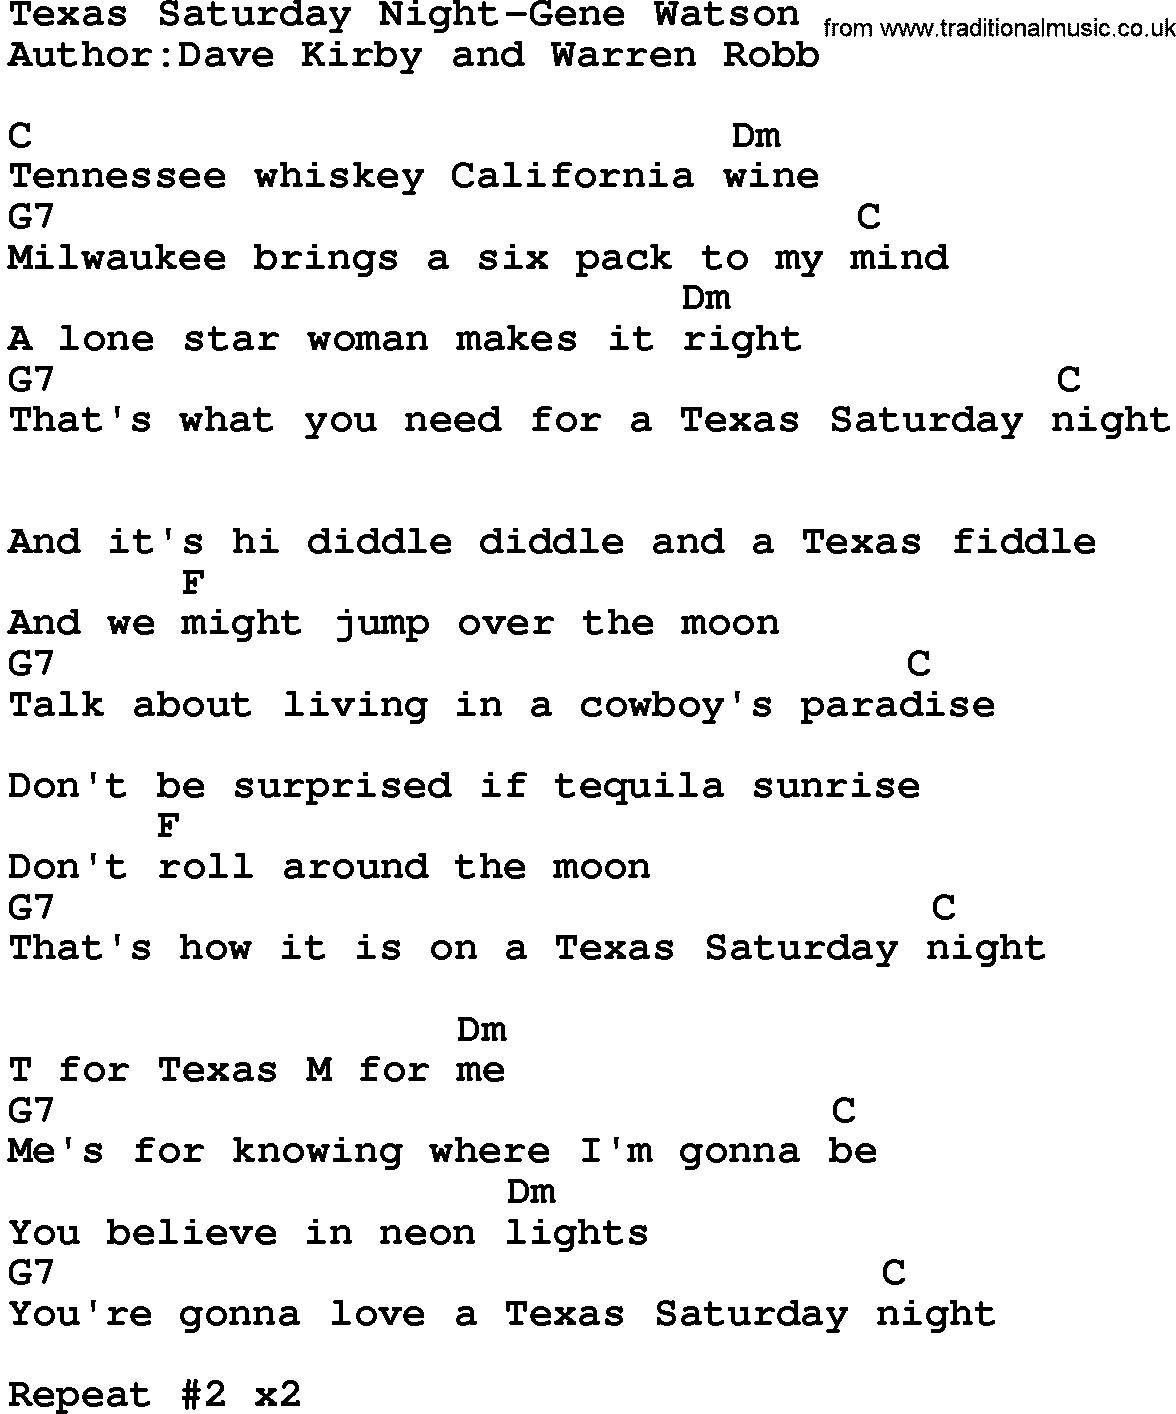 Country music song: Texas Saturday Night-Gene Watson lyrics and chords